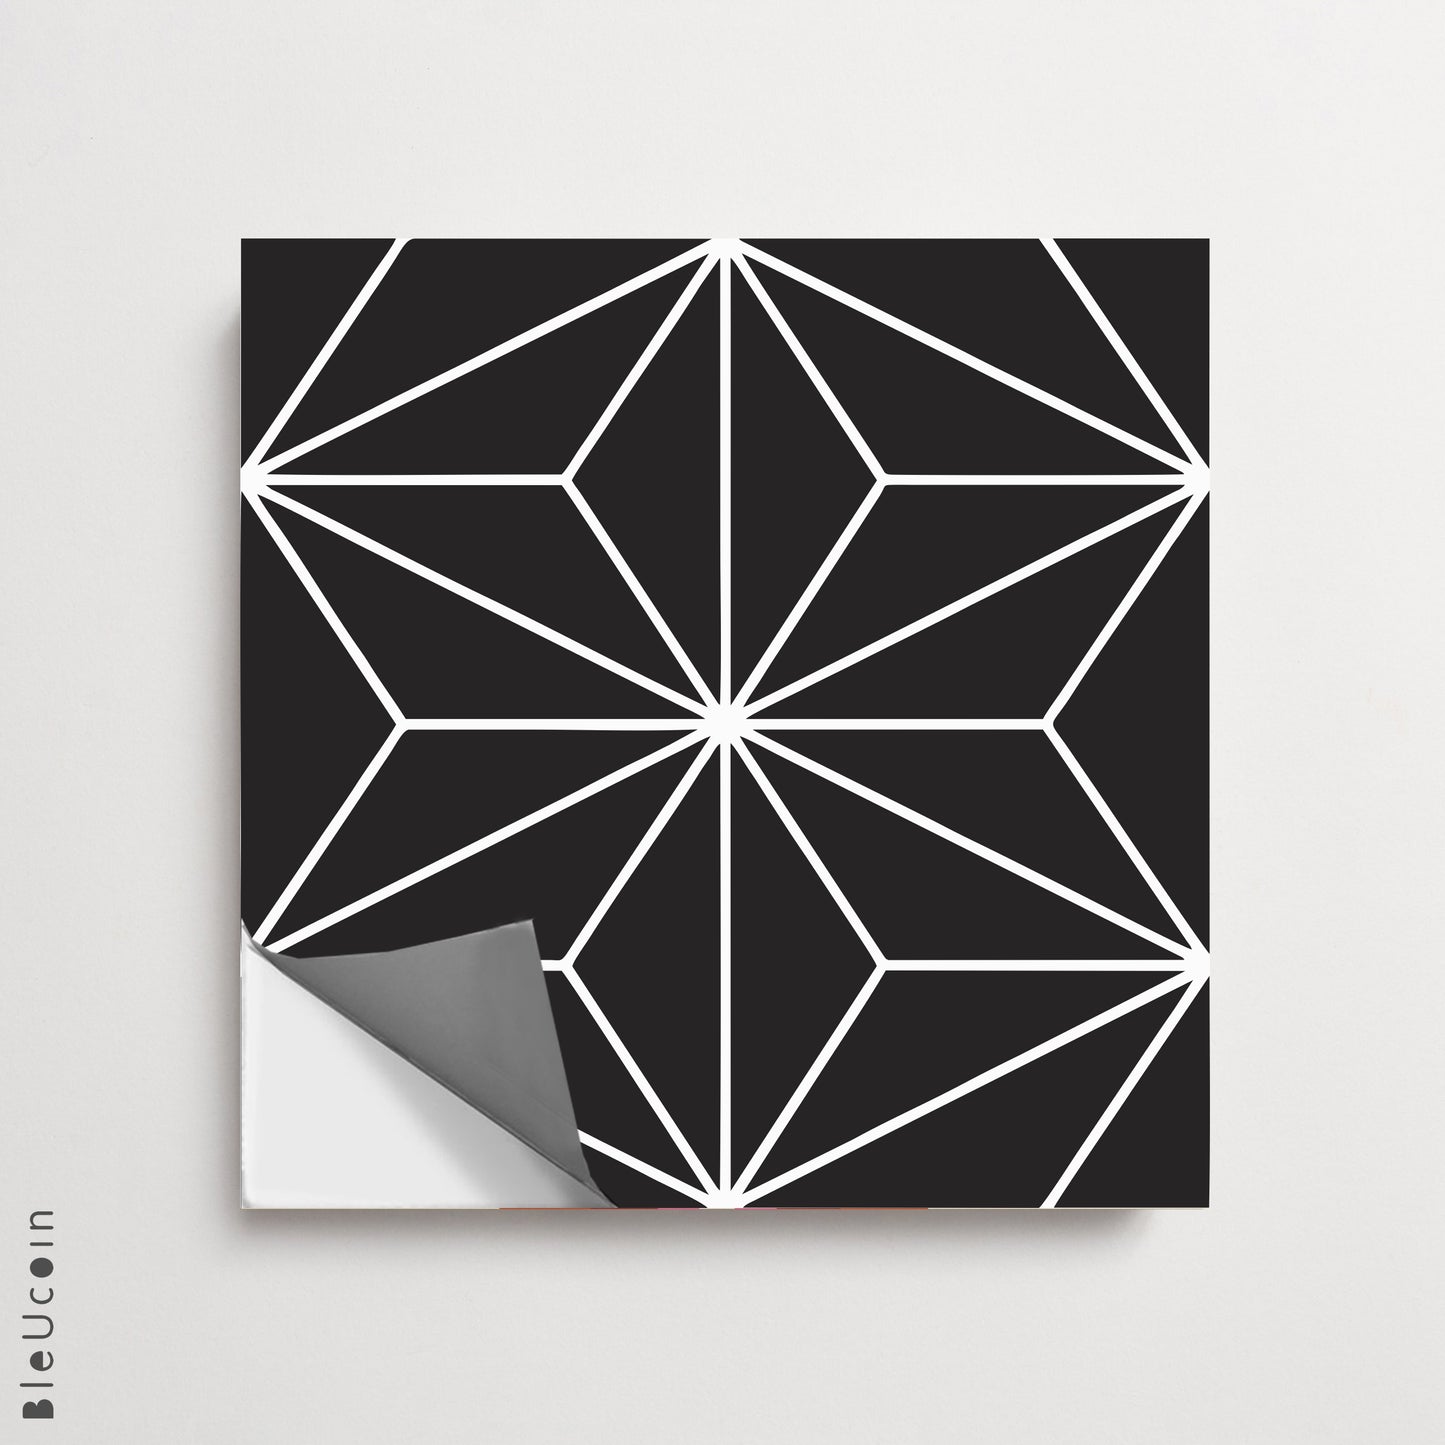 Basel Peel & Stick Tile